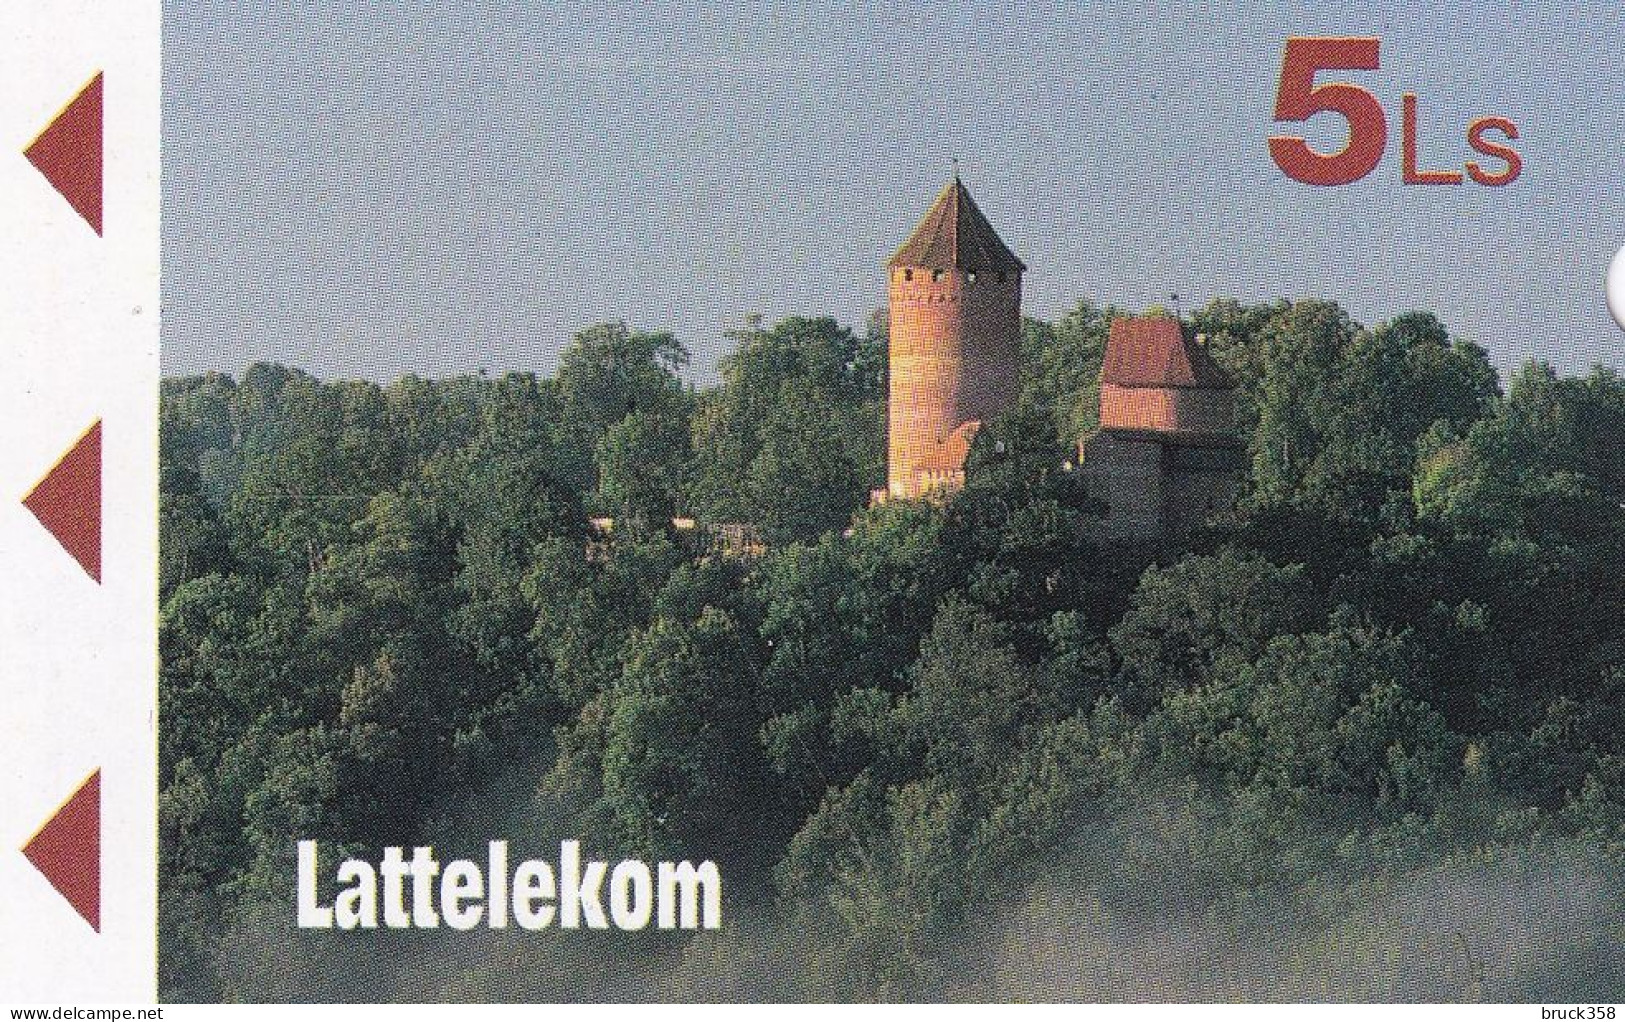 LETTLAND - Letland